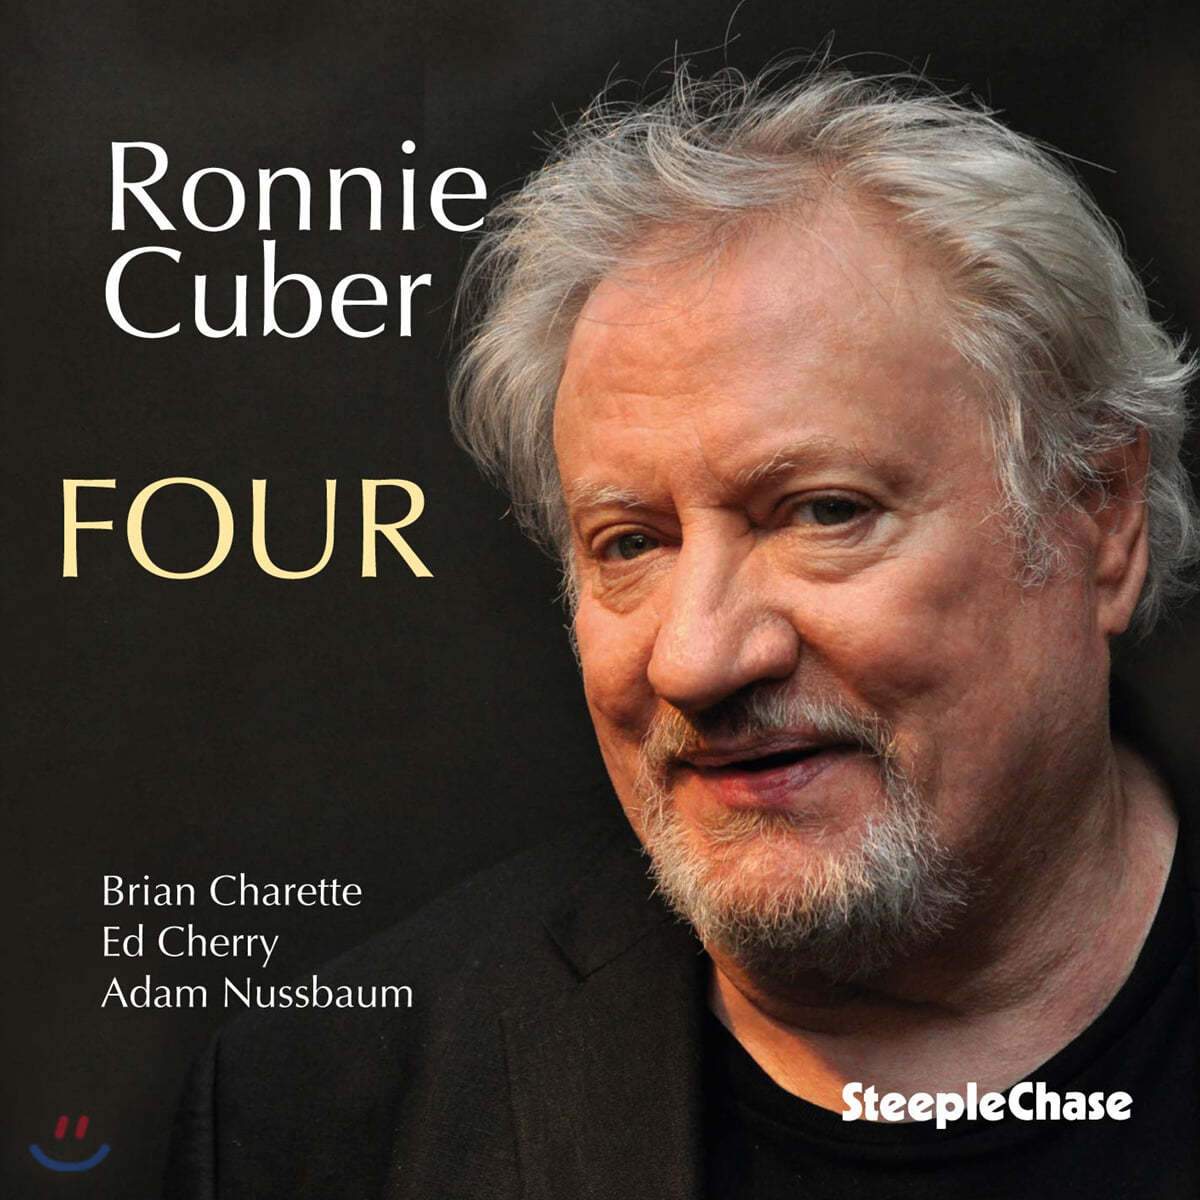 Ronnie Cuber (로니 쿠버) - Four 